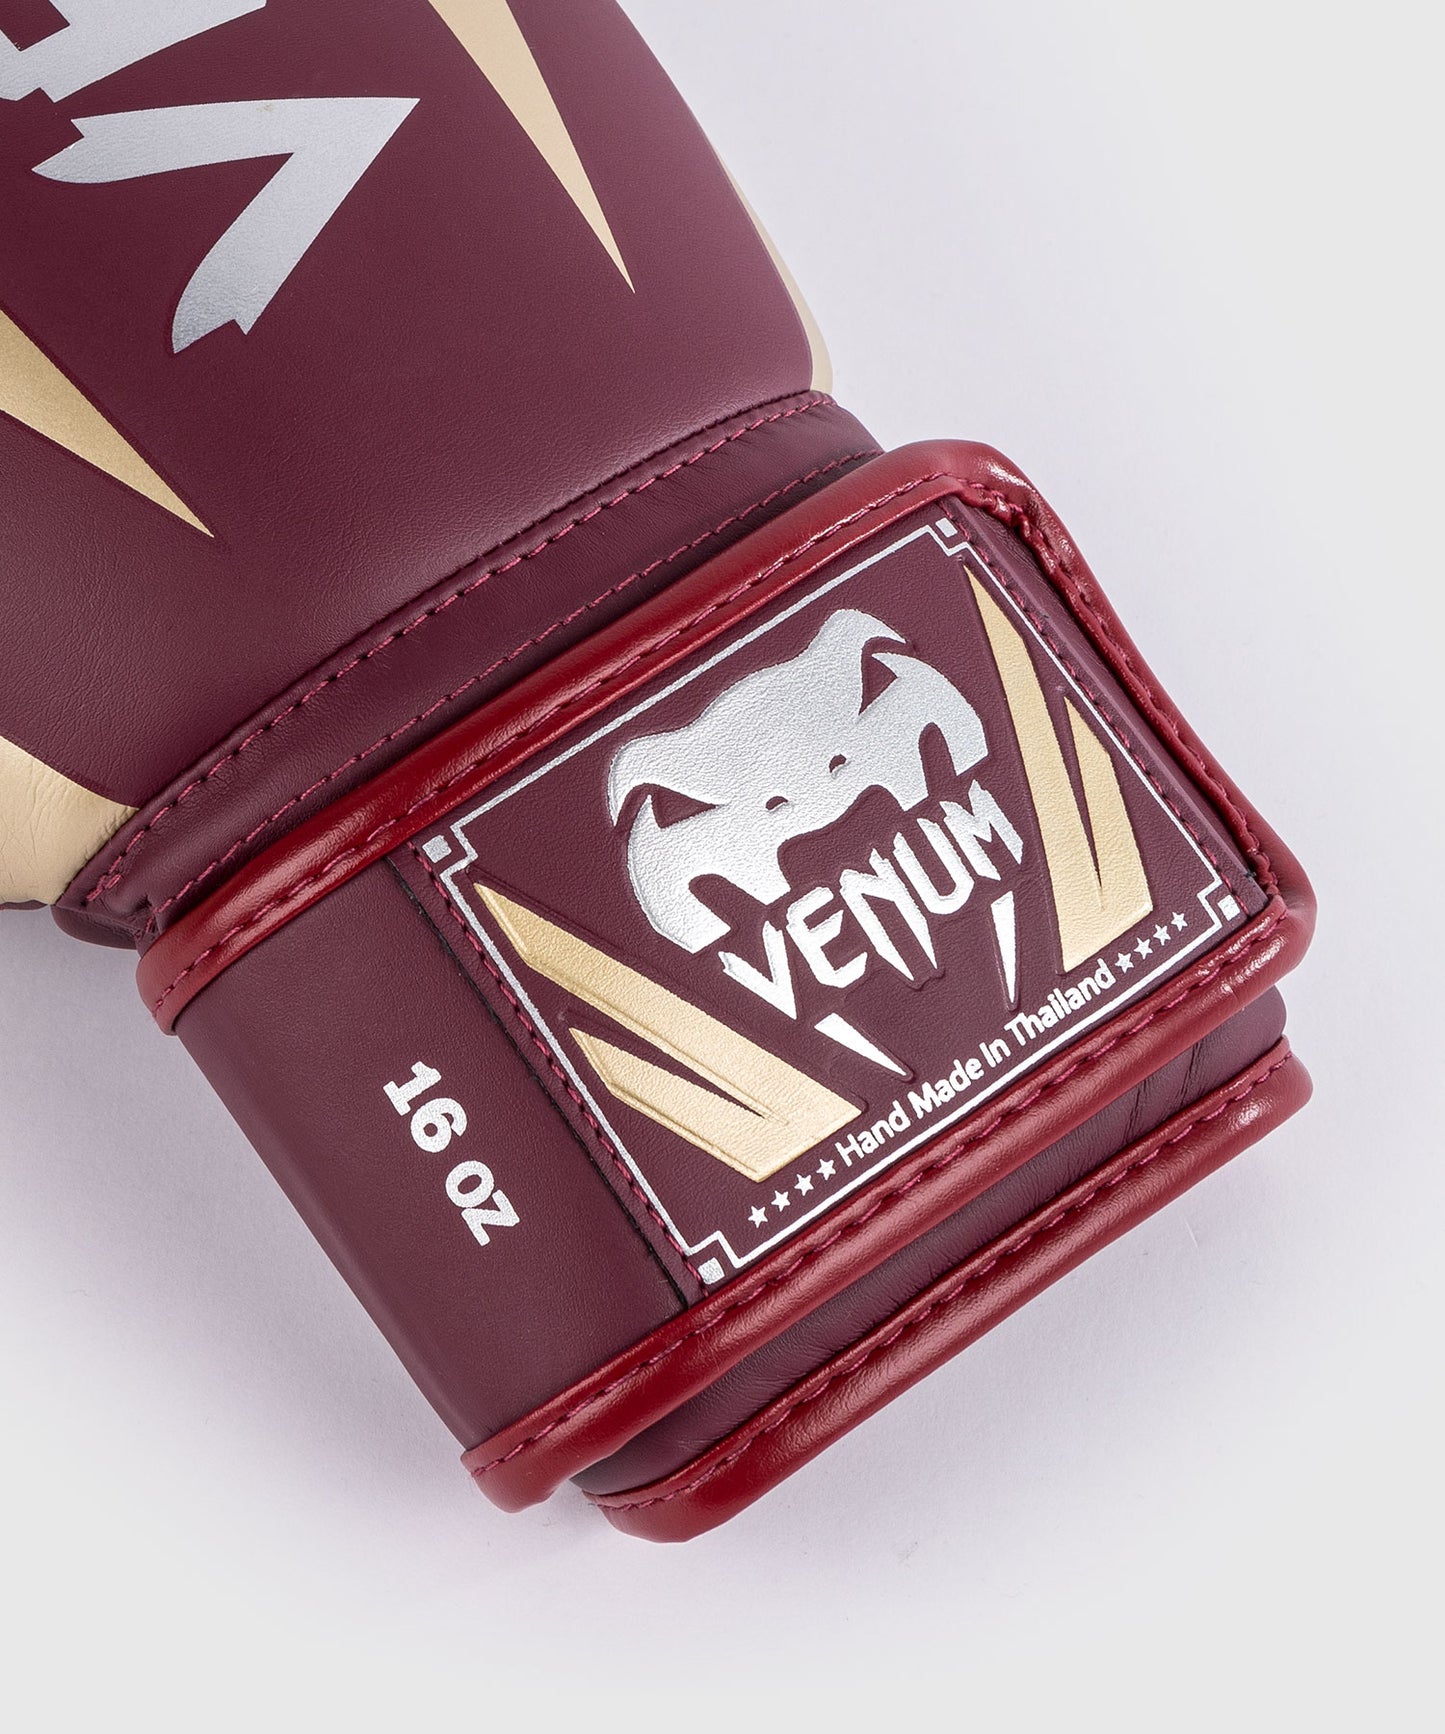 Venum Elite Boxing Gloves - Burgundy/Gold